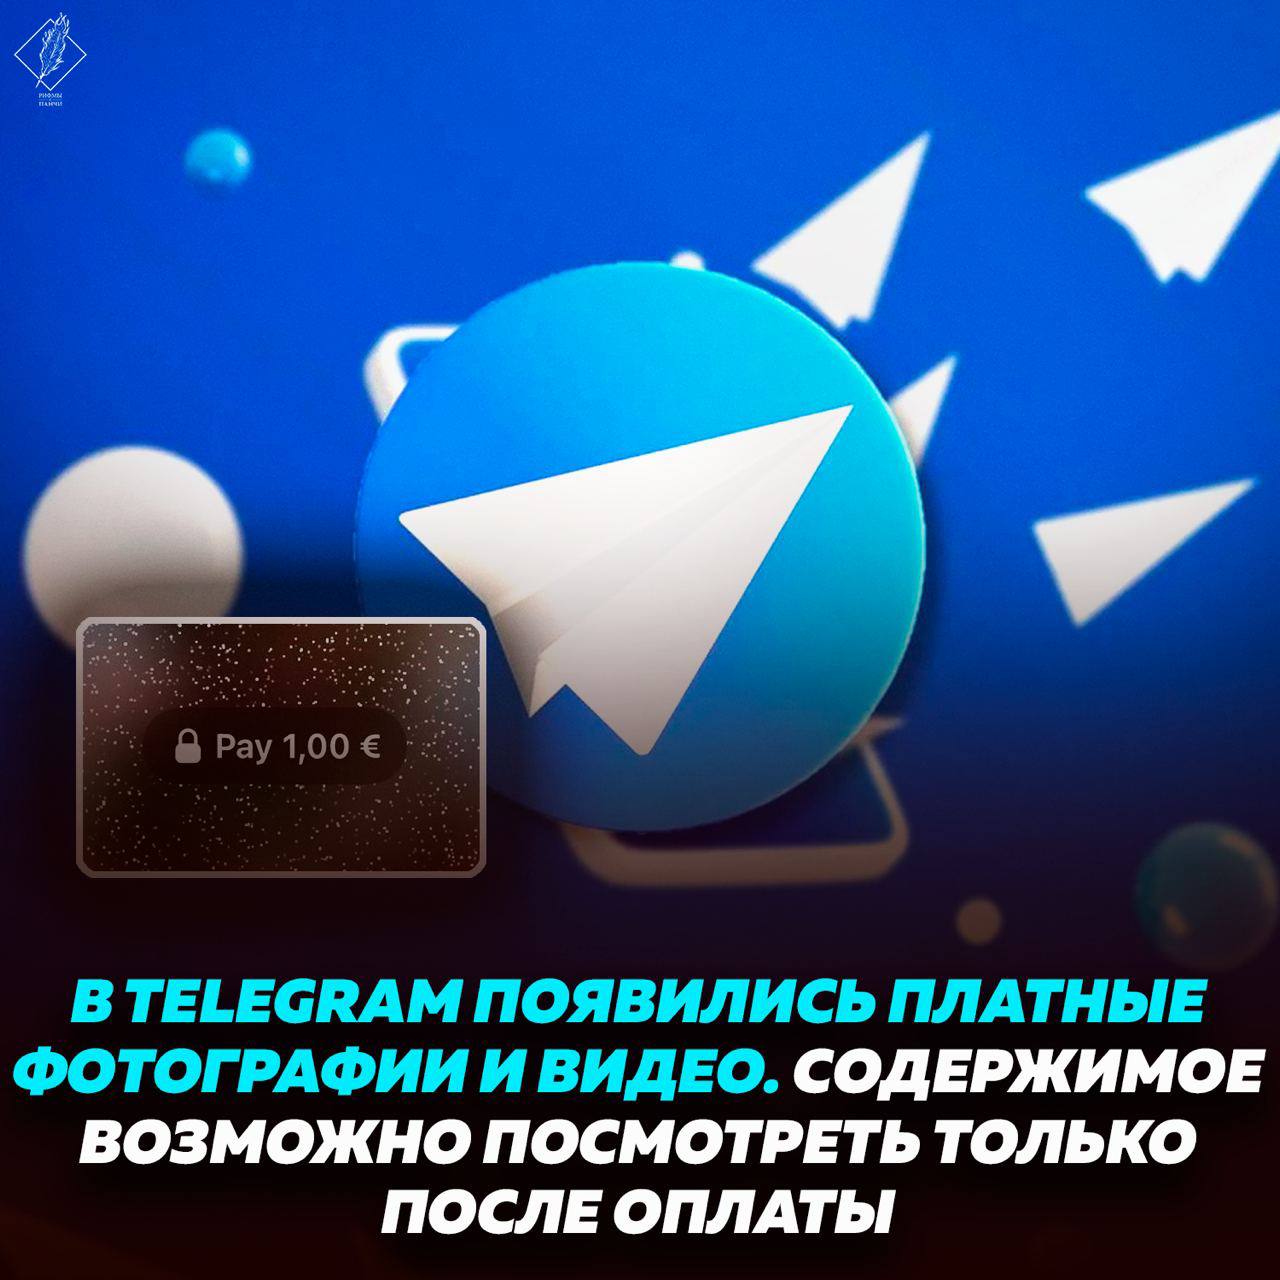 Отправить видео в телеграмм не файлом фото 112